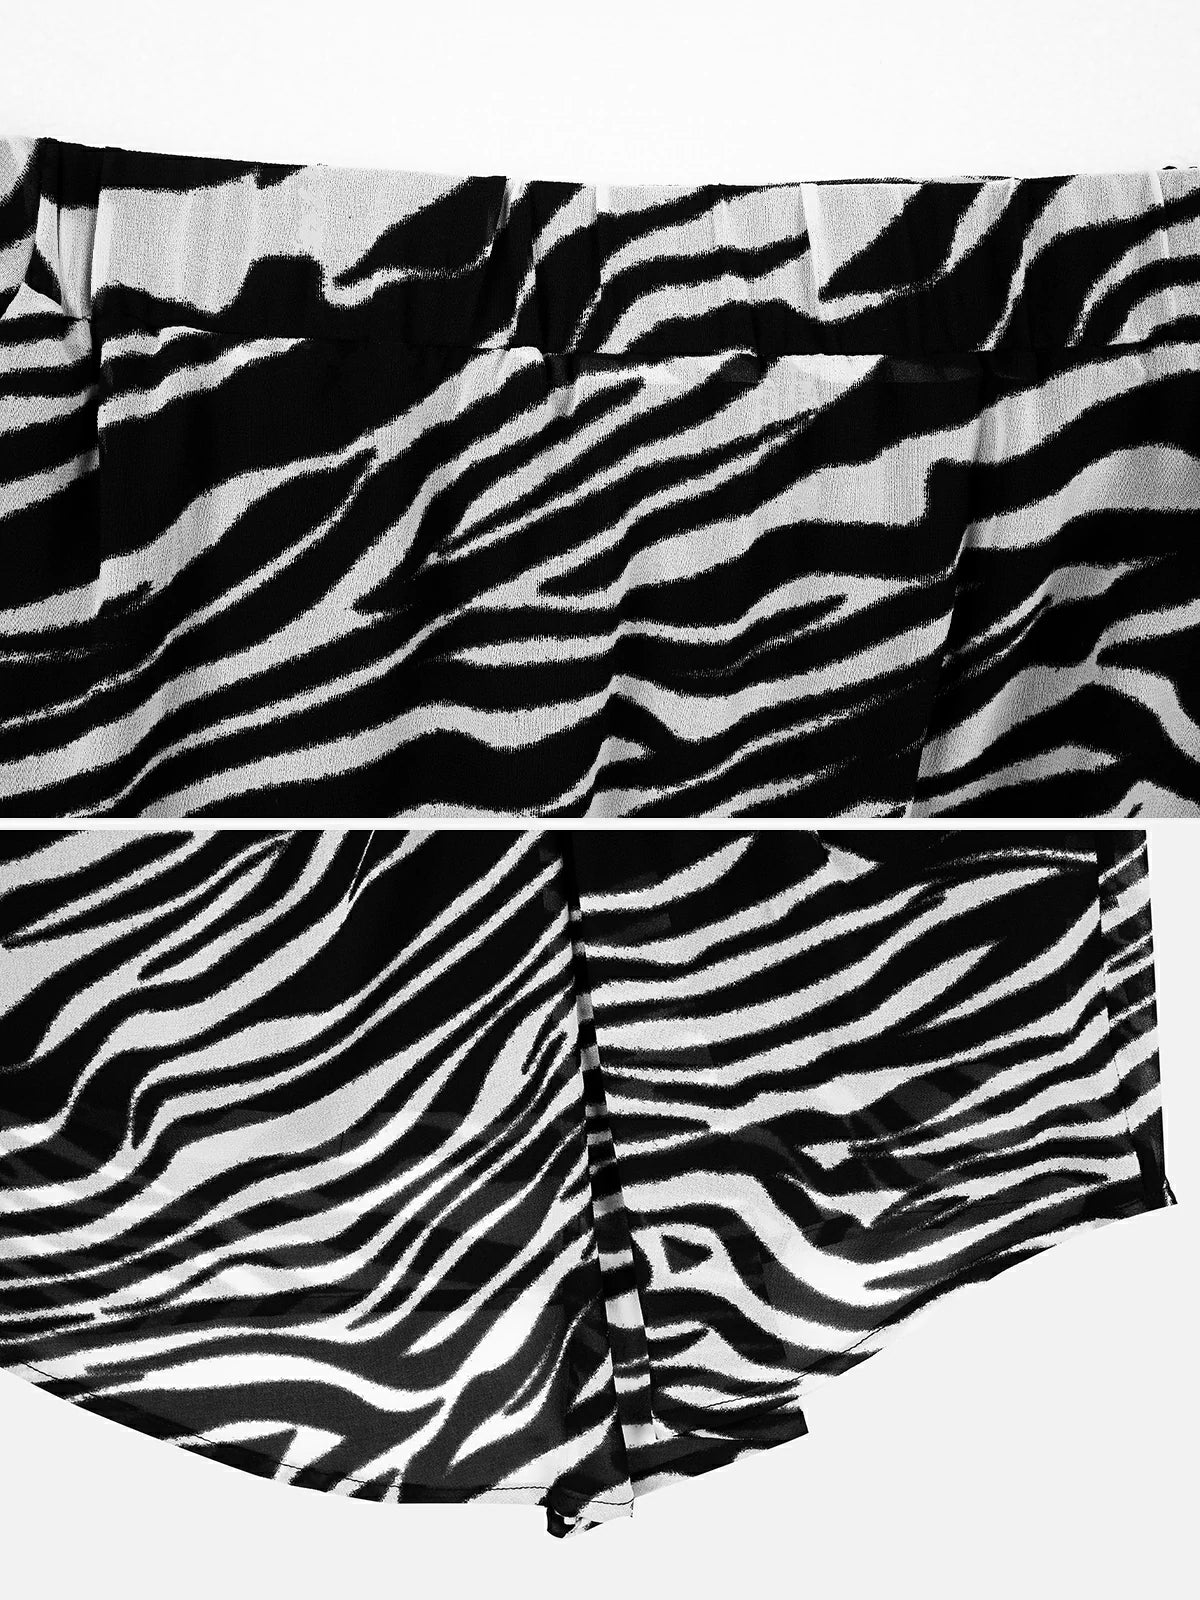 High Waist Zebra Stripe Irregular Skirt